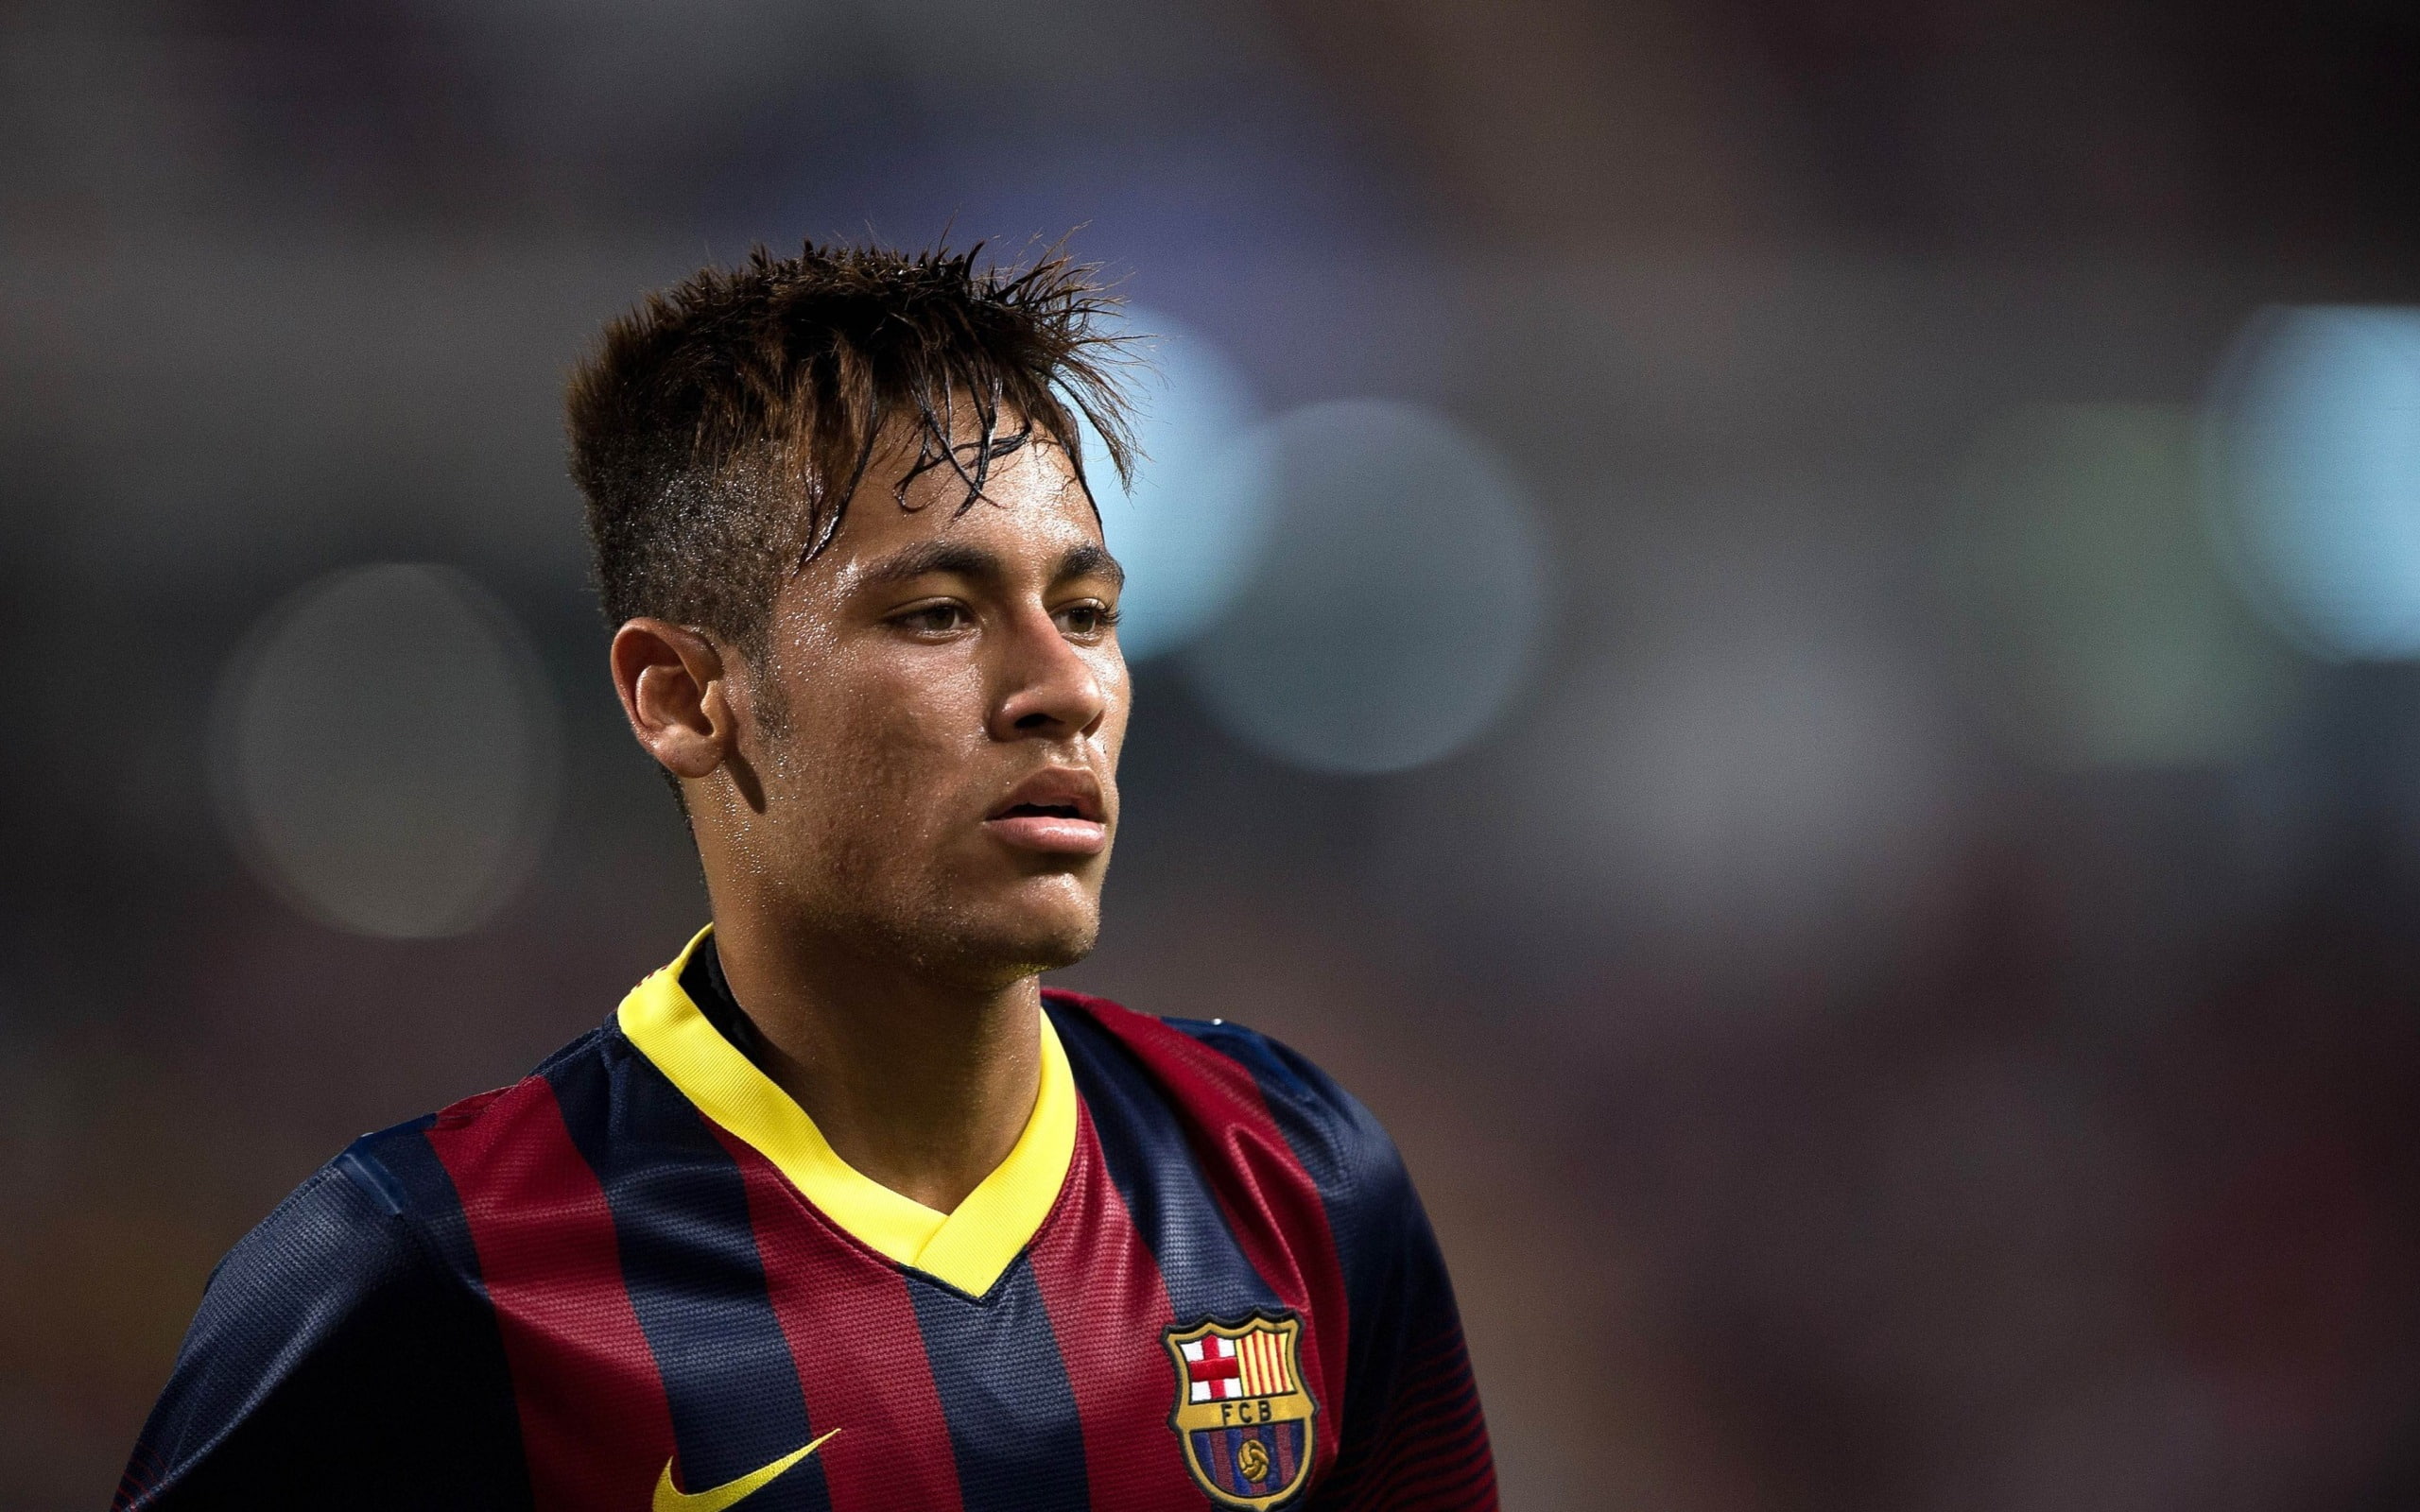 Neymar JR-FIFA BALLON DOR 2015 Wallpaper 05, portrait, one person